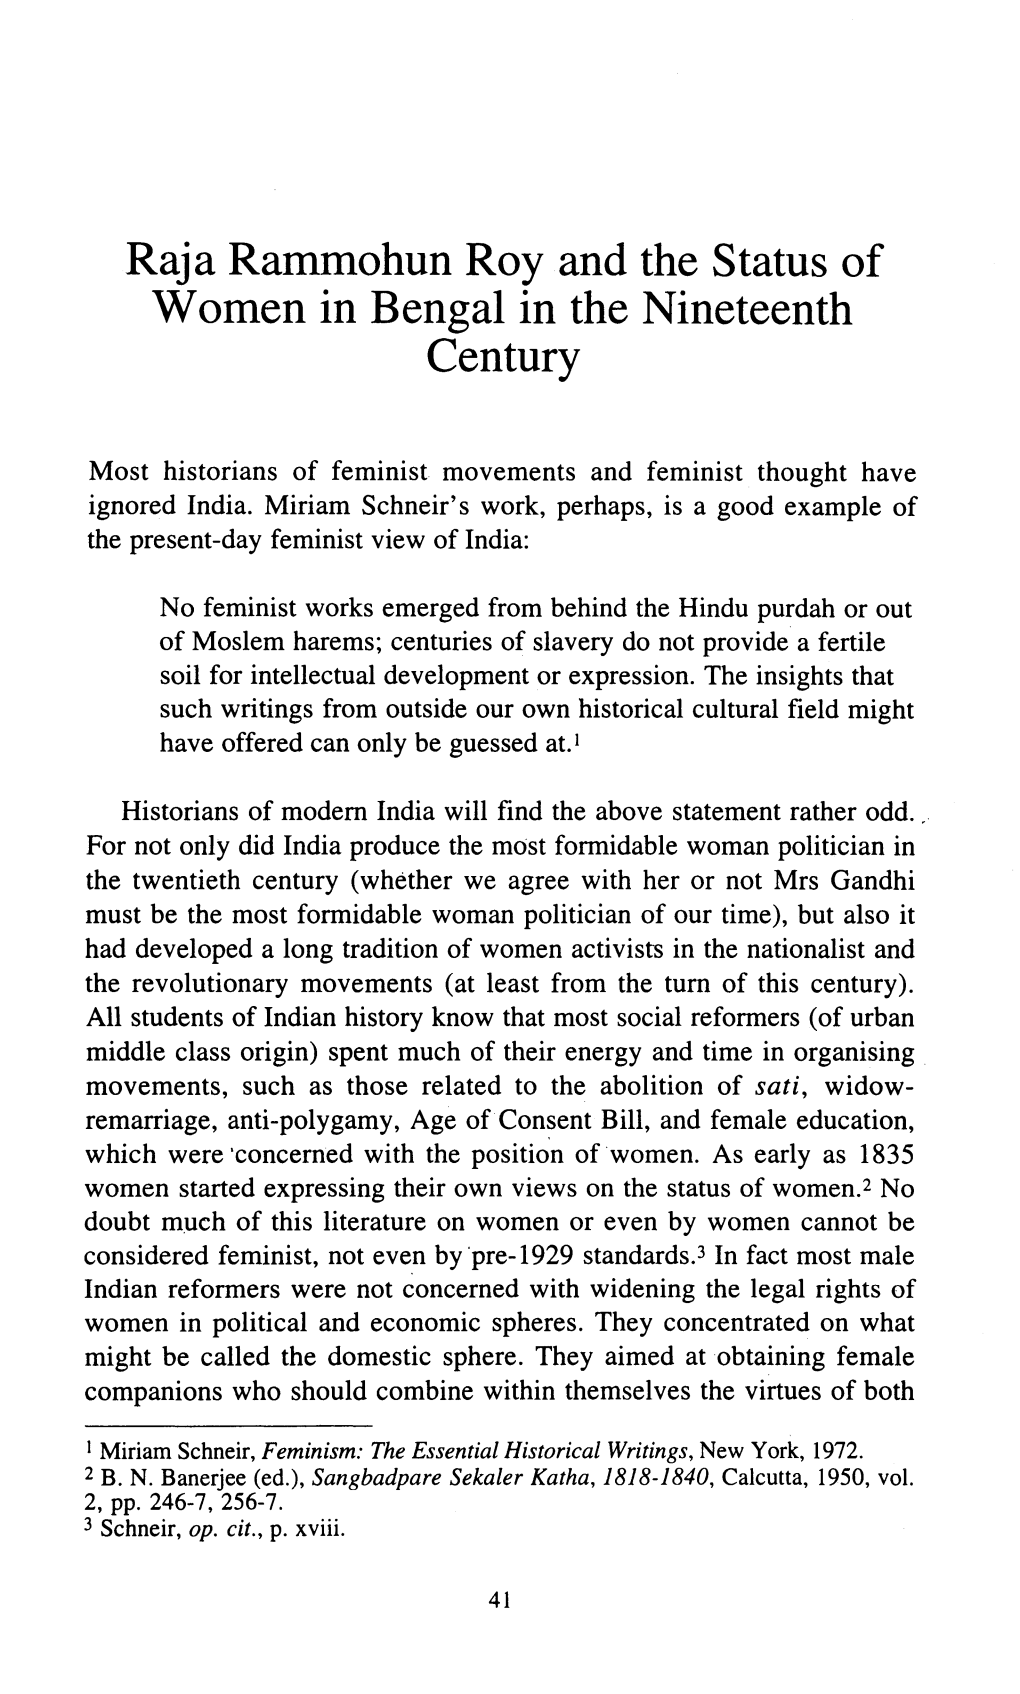 Raja Rammohun Roy and the Status of Women in Bengal in the Nineteenth Century